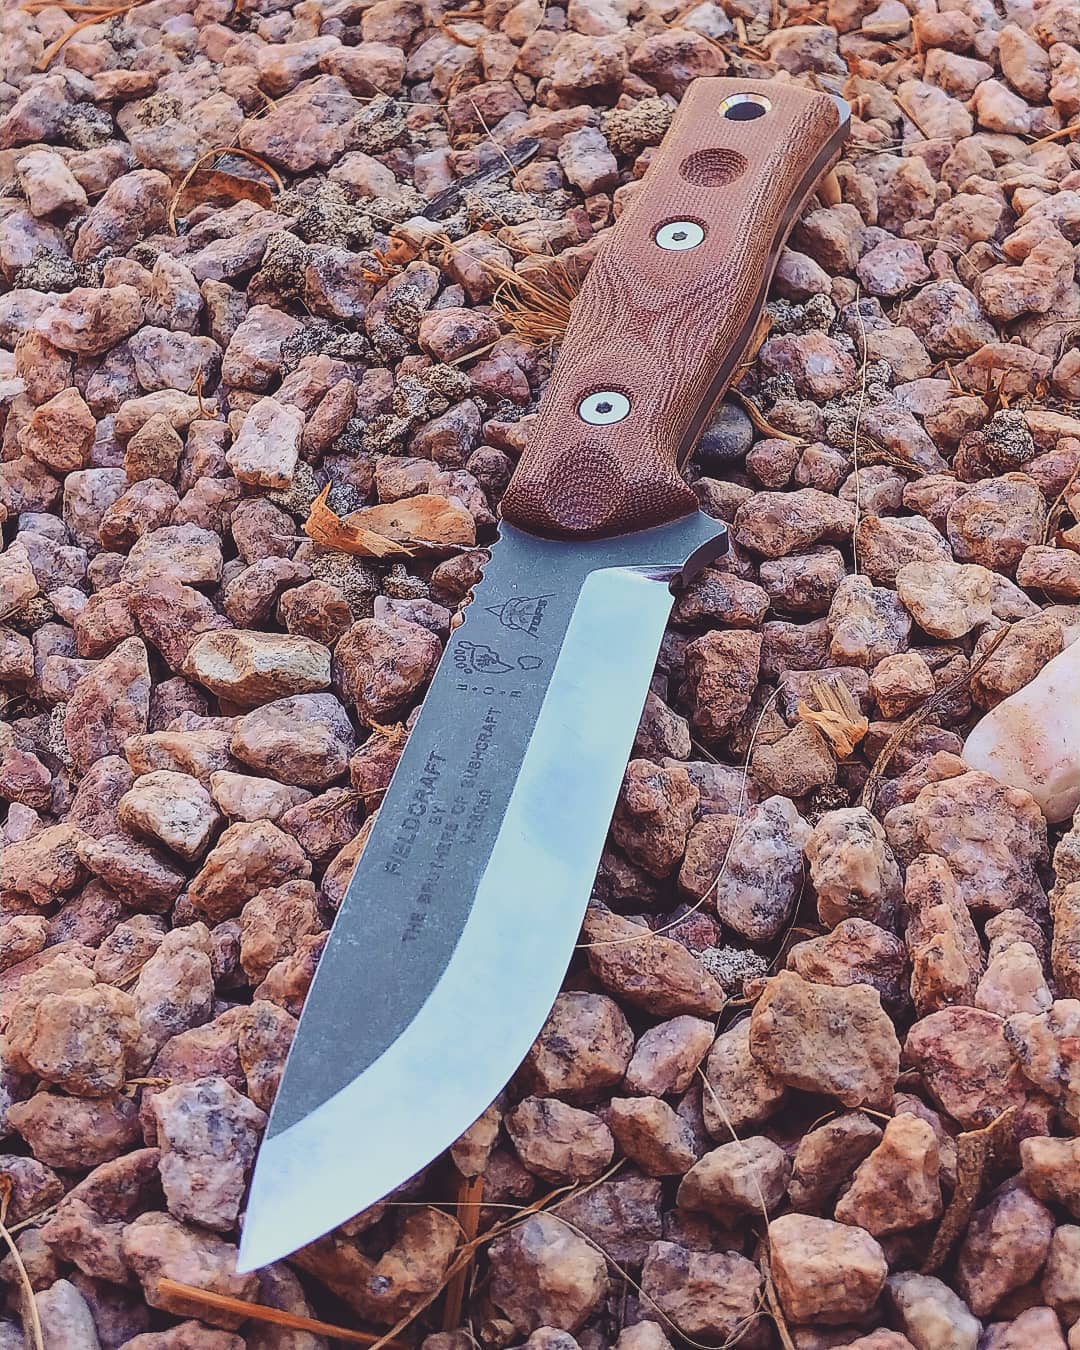  Tumbler Leather Strop For Knife Sharpening - Knife